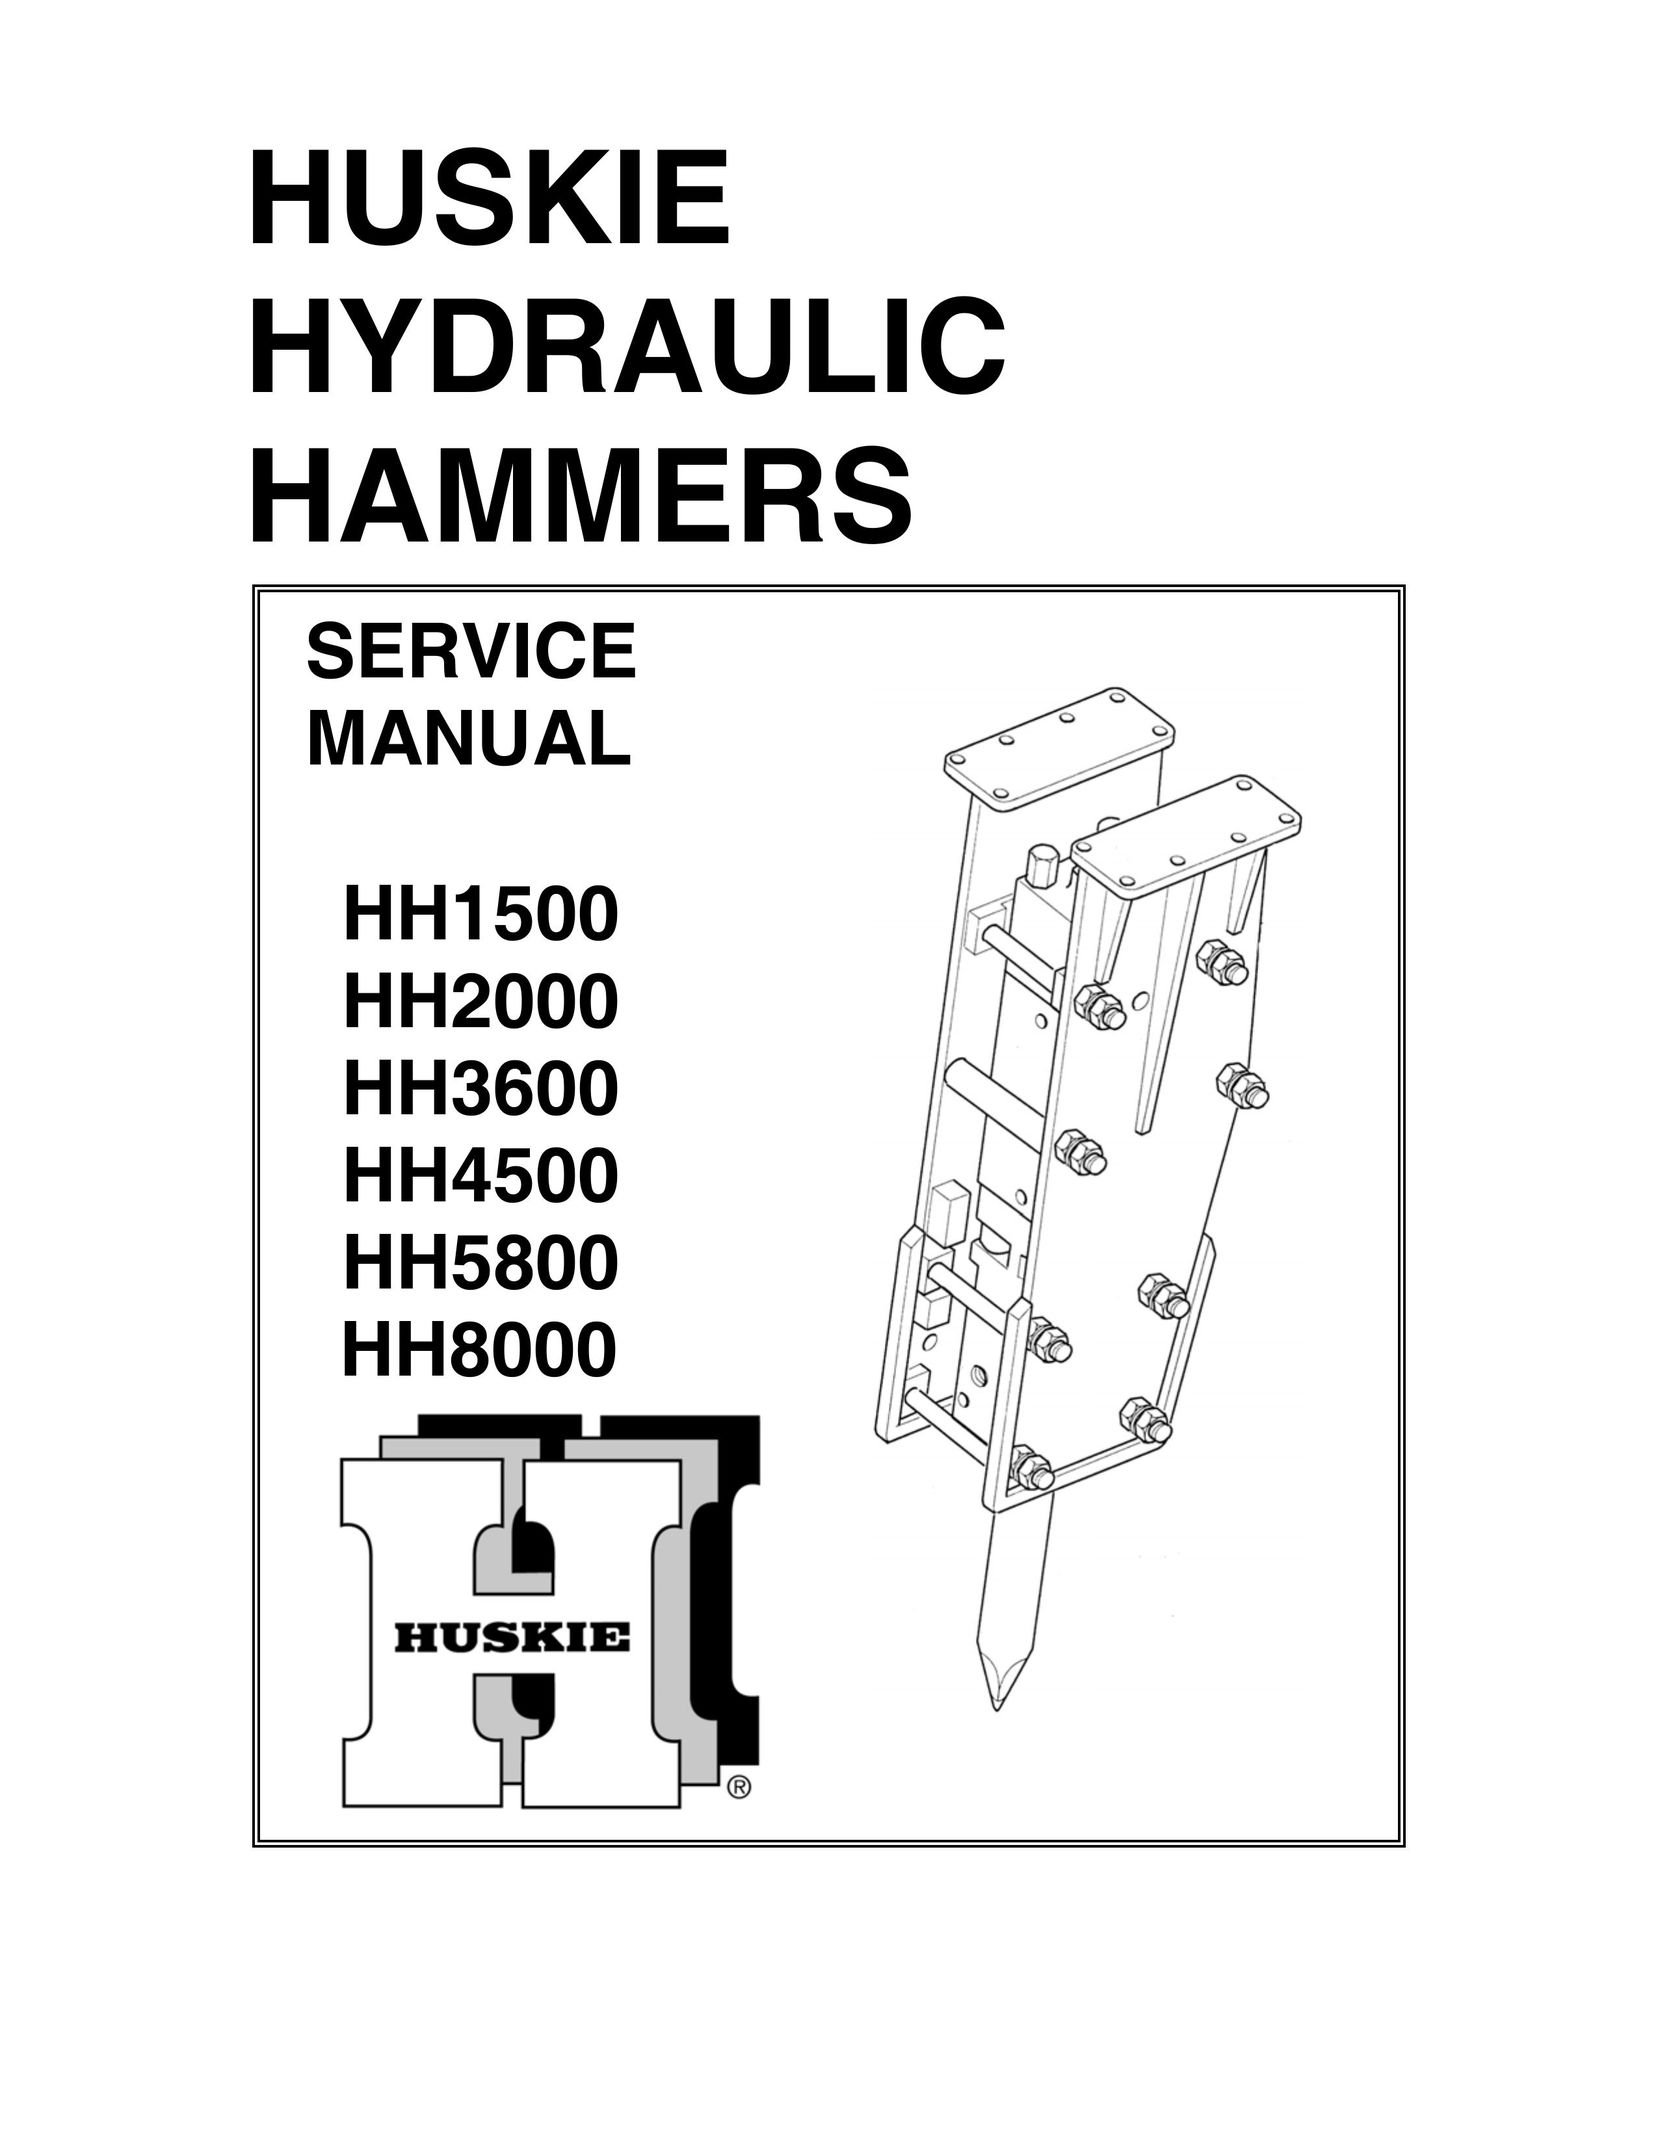 Huskee HH8000 Cordless Drill User Manual